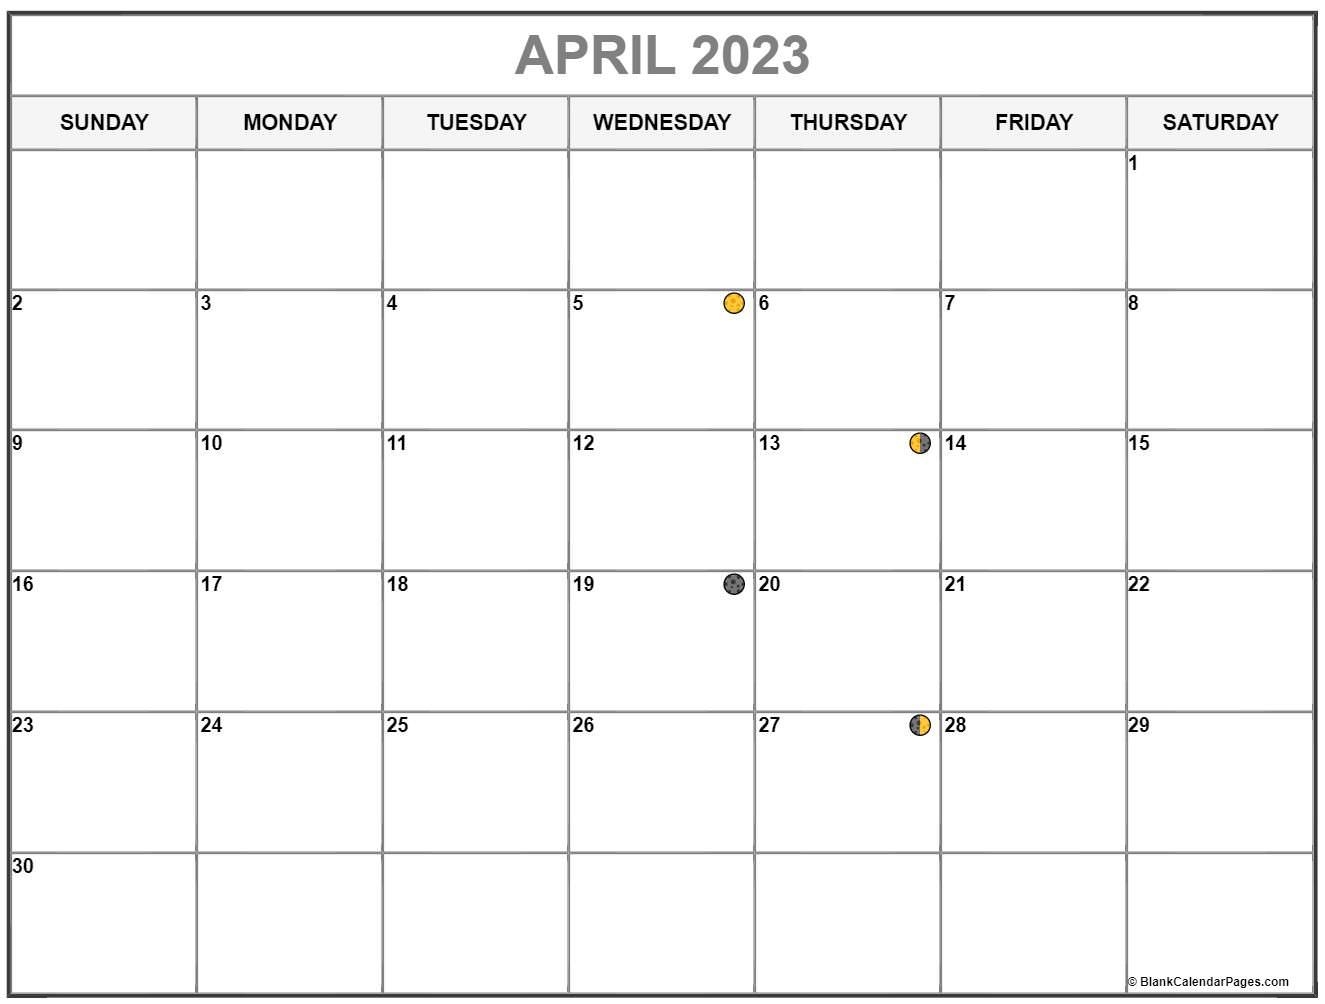 April 2023 Lunar Calendar | Moon Phase Calendar